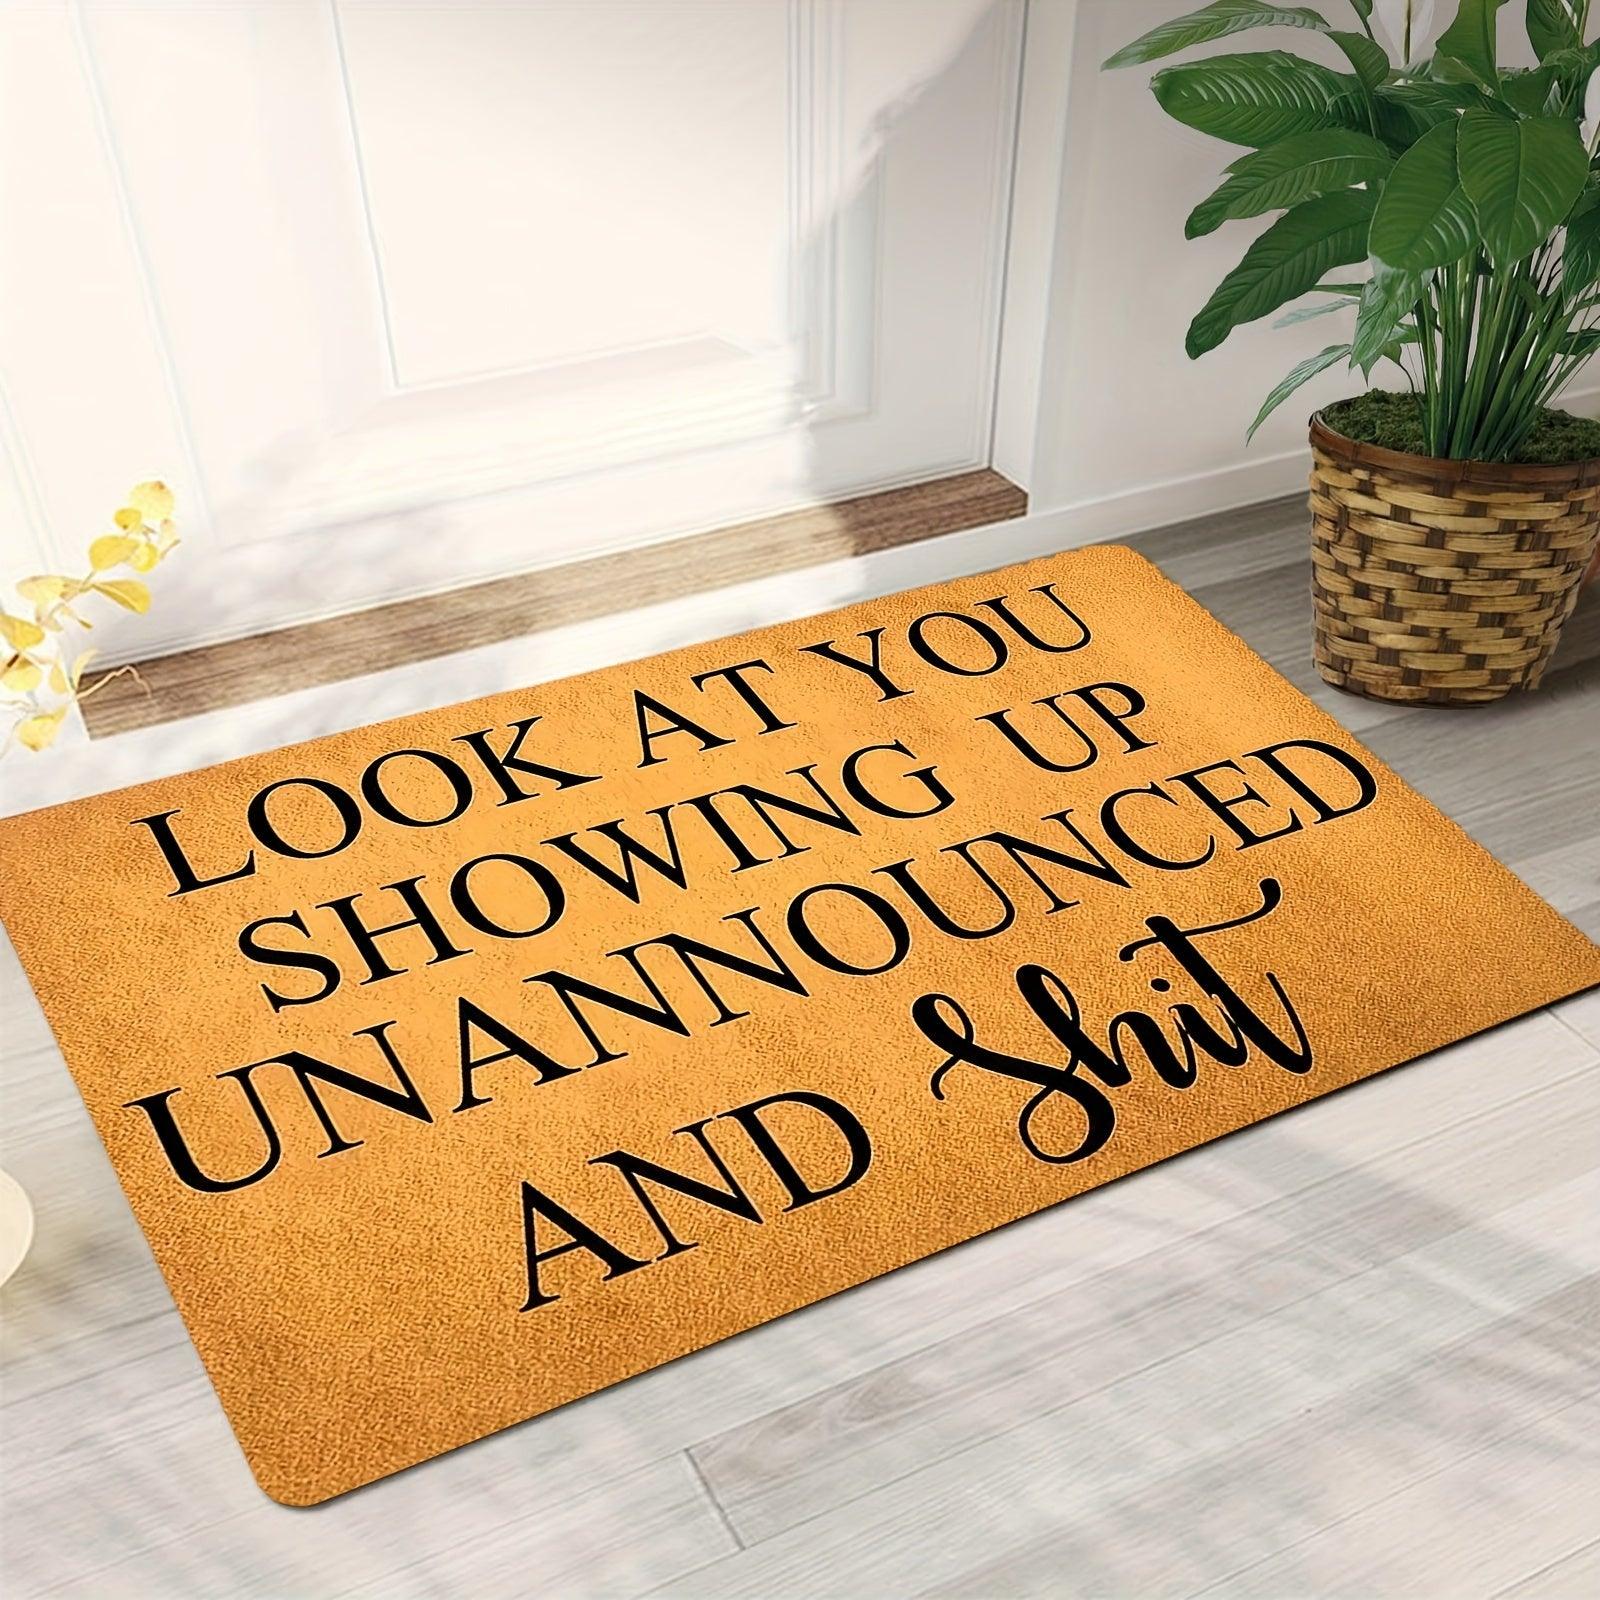 welcome-doormat-rectangular-carpet-with-anti-slip-backing-moisture-proof